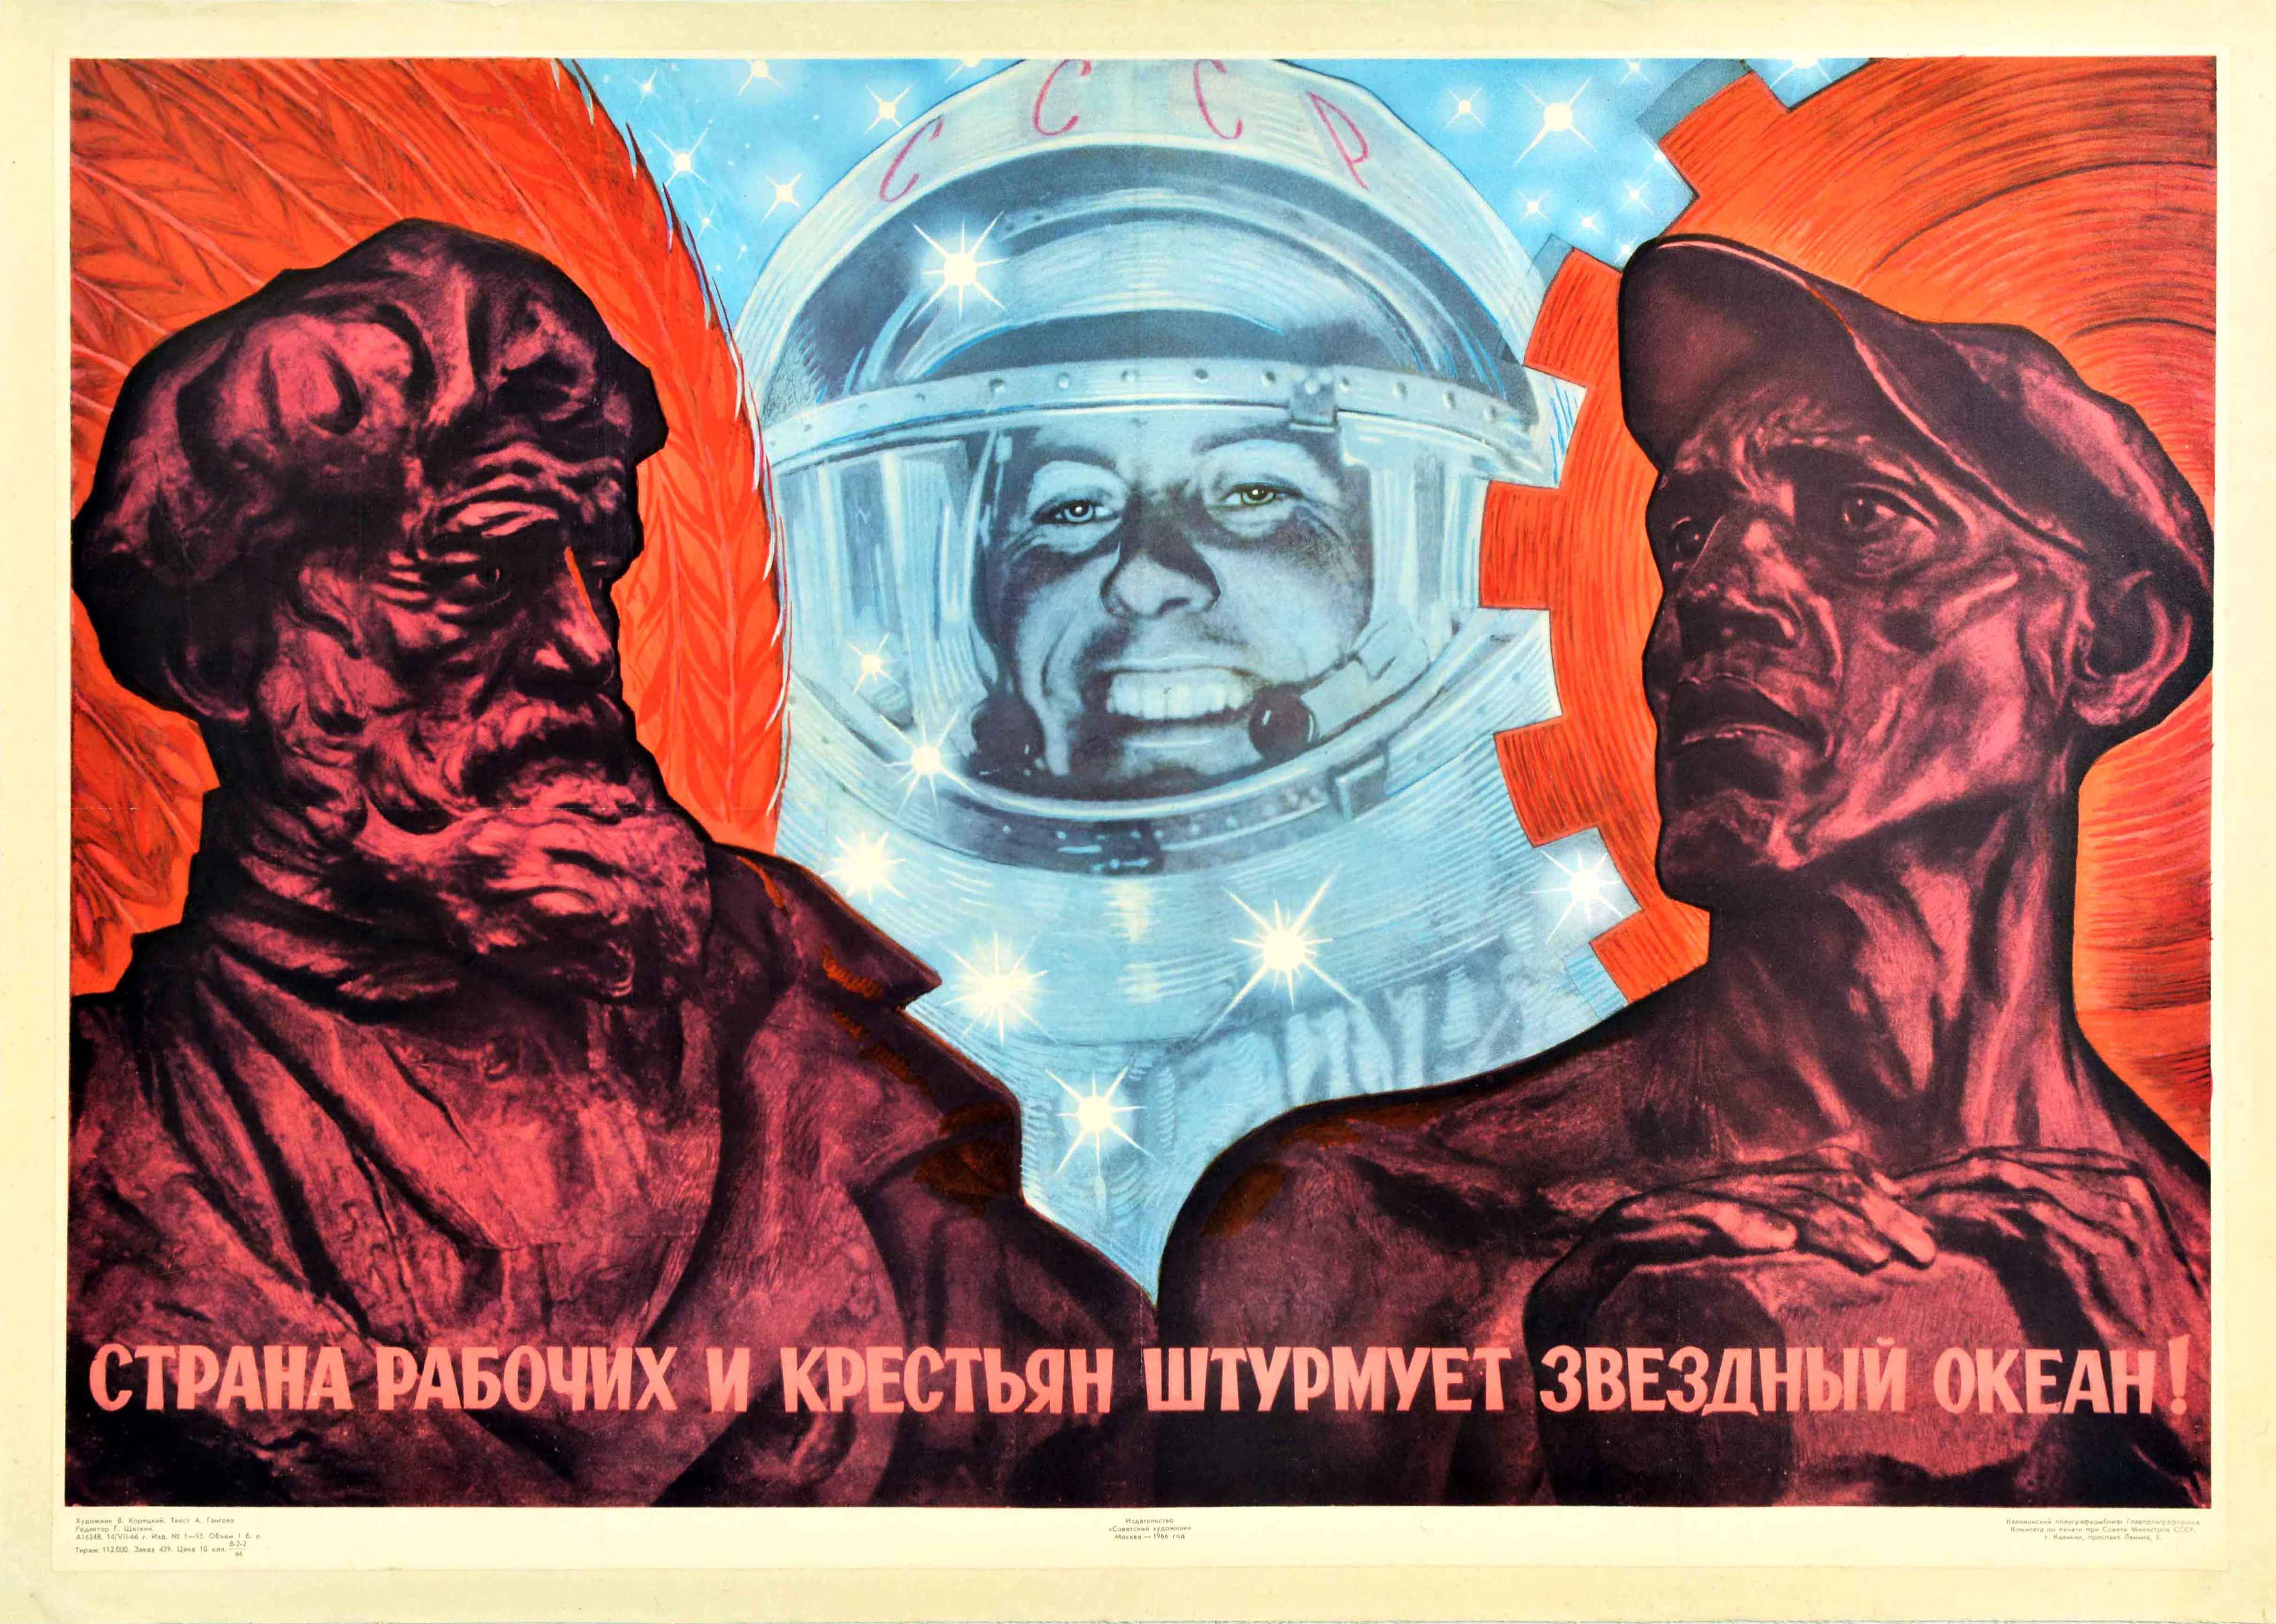 Print Viktor Koretsky  - Affiche de propagande soviétique originale de Gagarin, Océan Atlantique tempérée, URSS